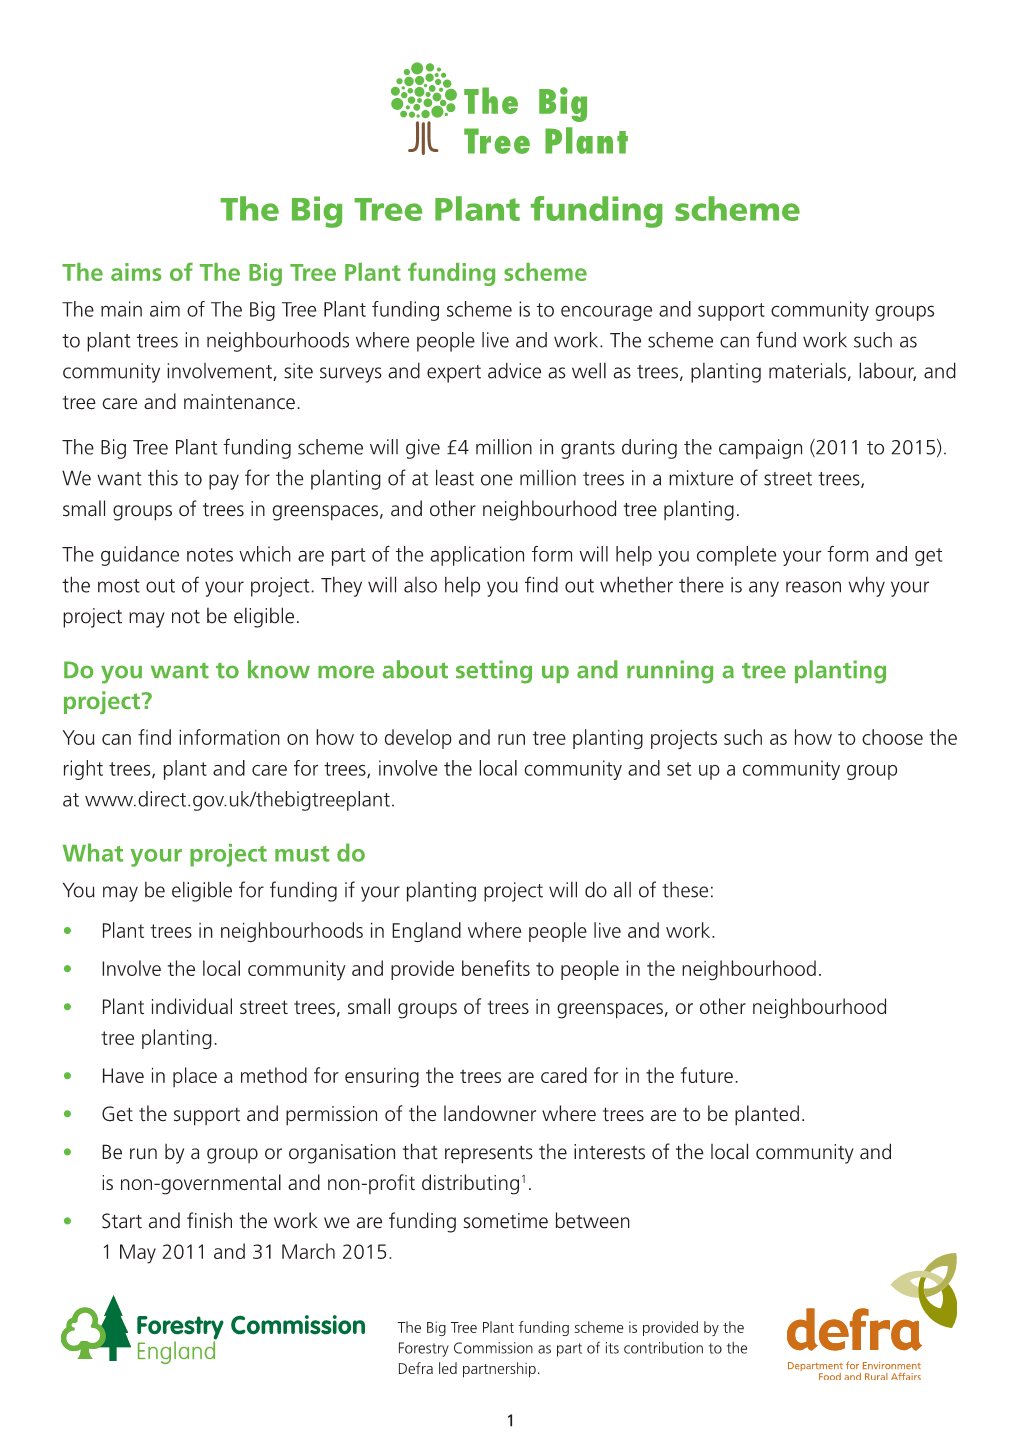 The Big Tree Plant Funding Scheme